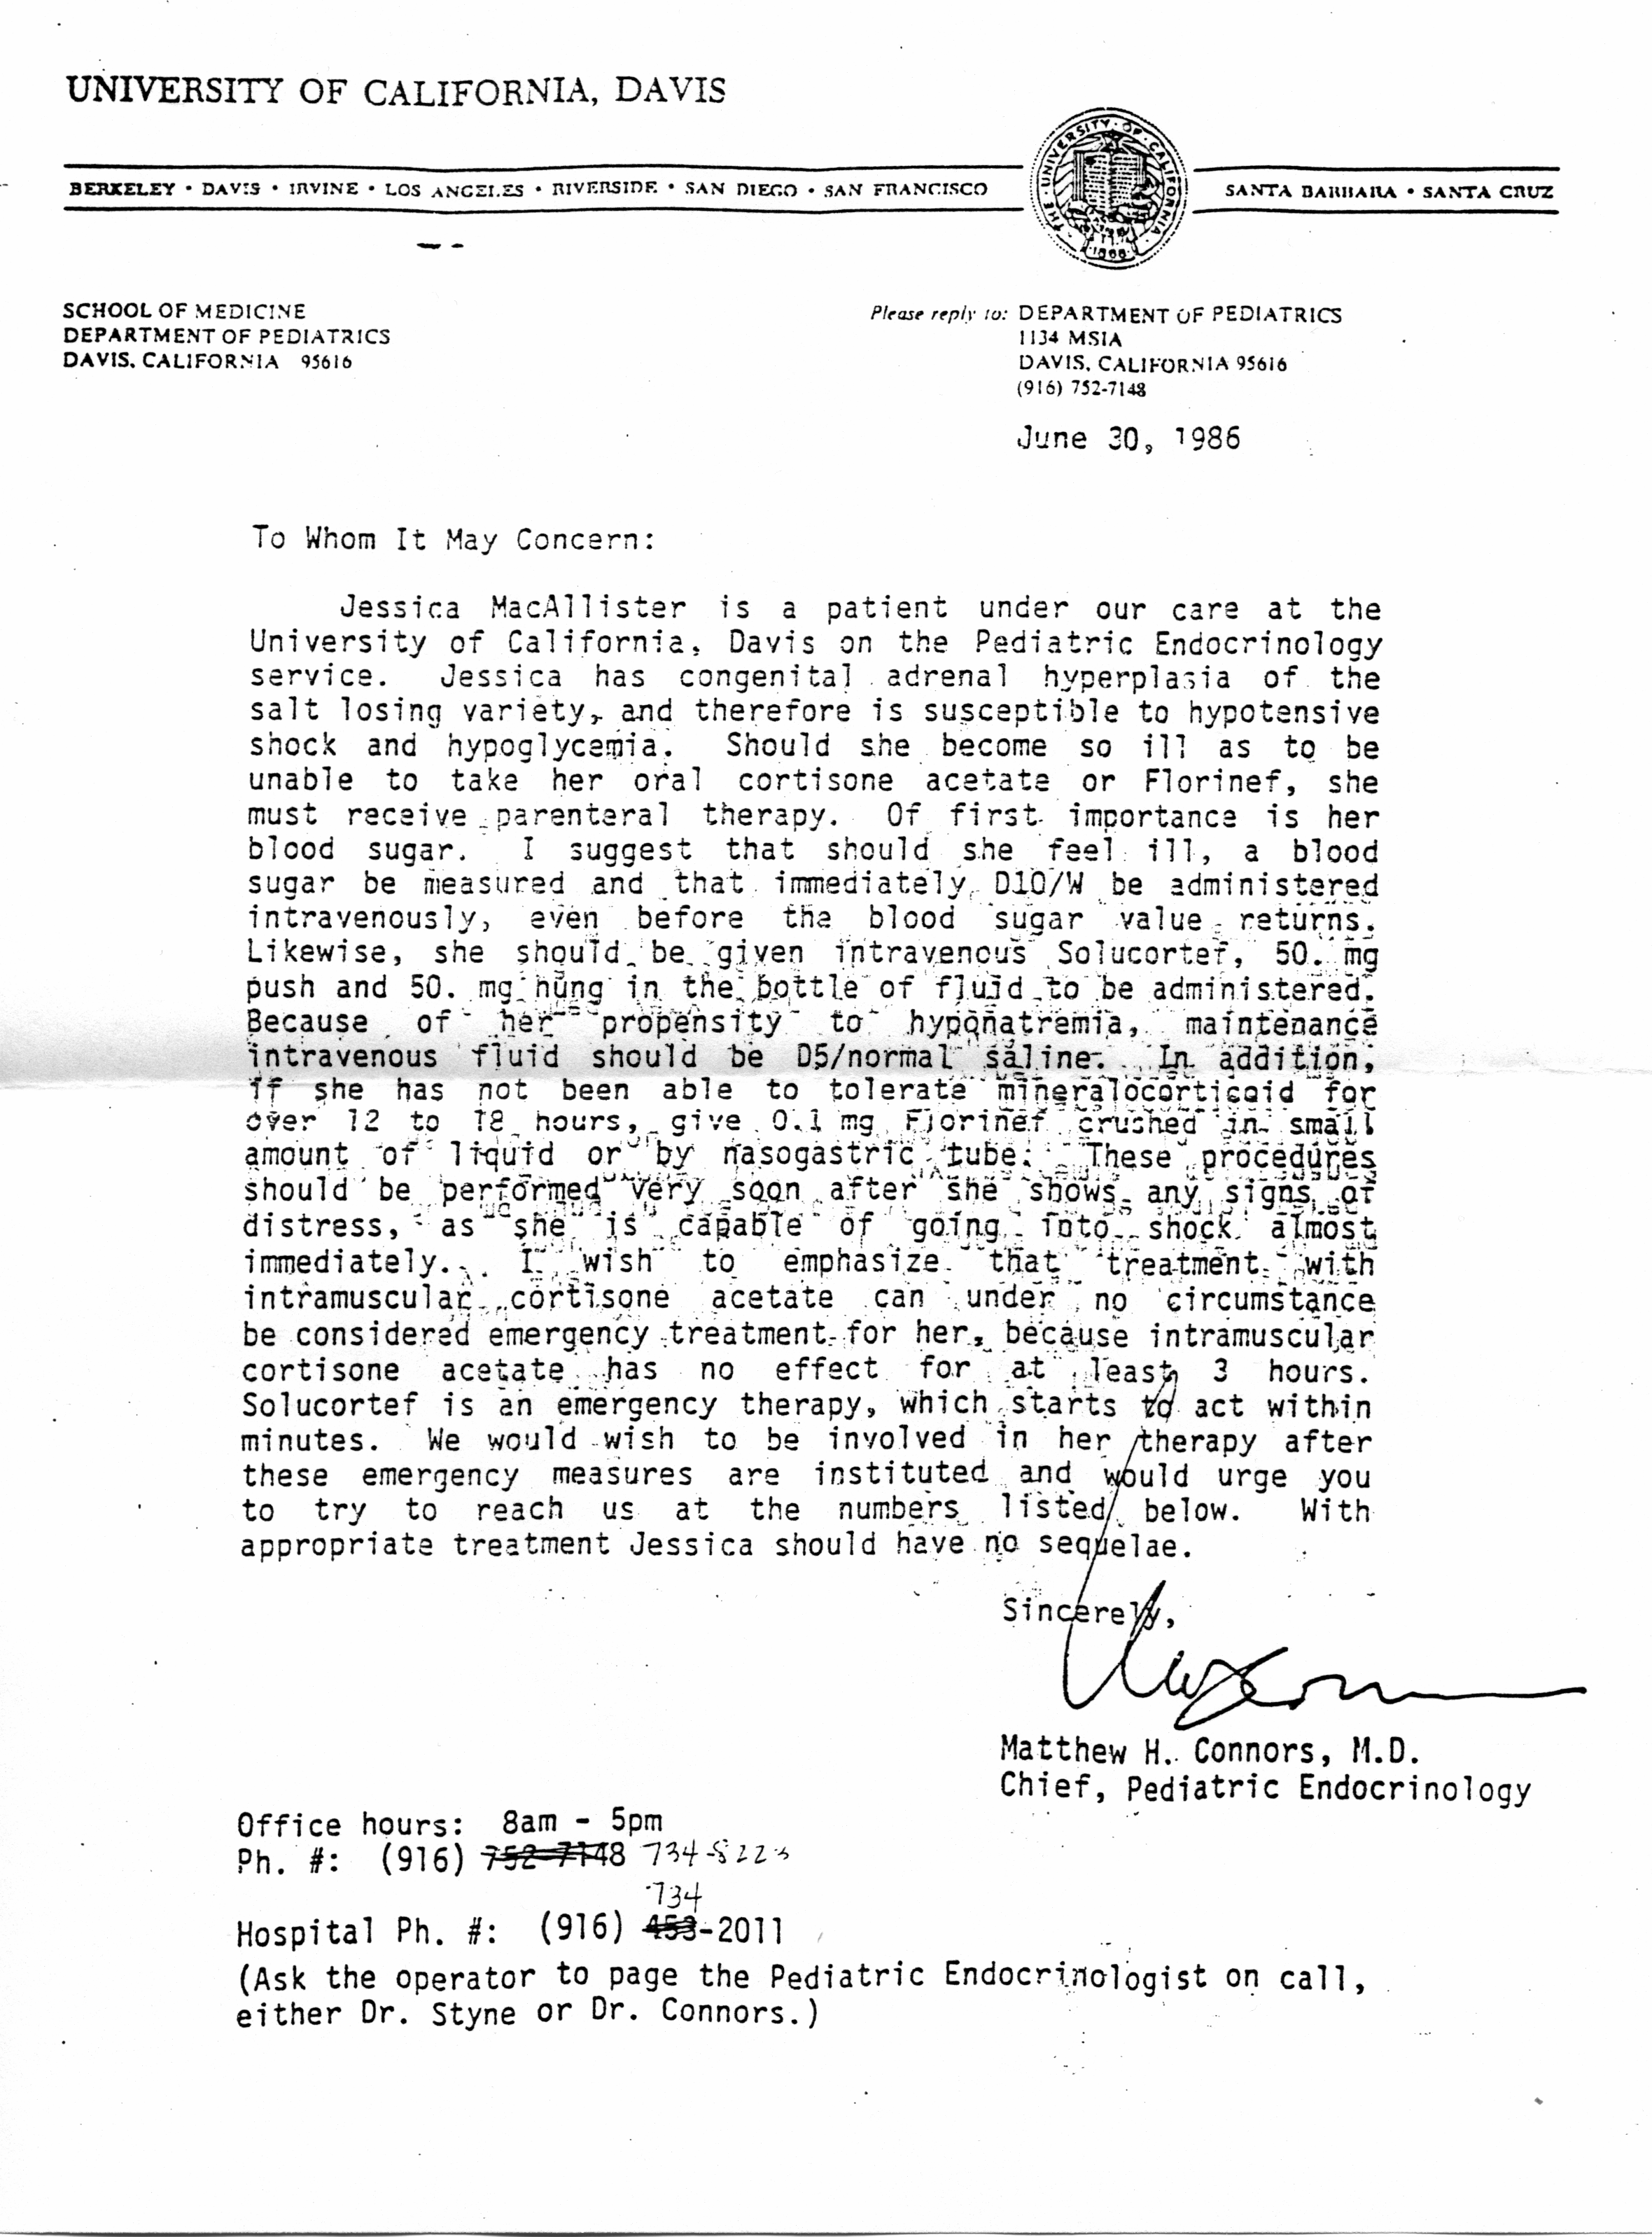 1986 Jessica MacAllister Emergency Letter